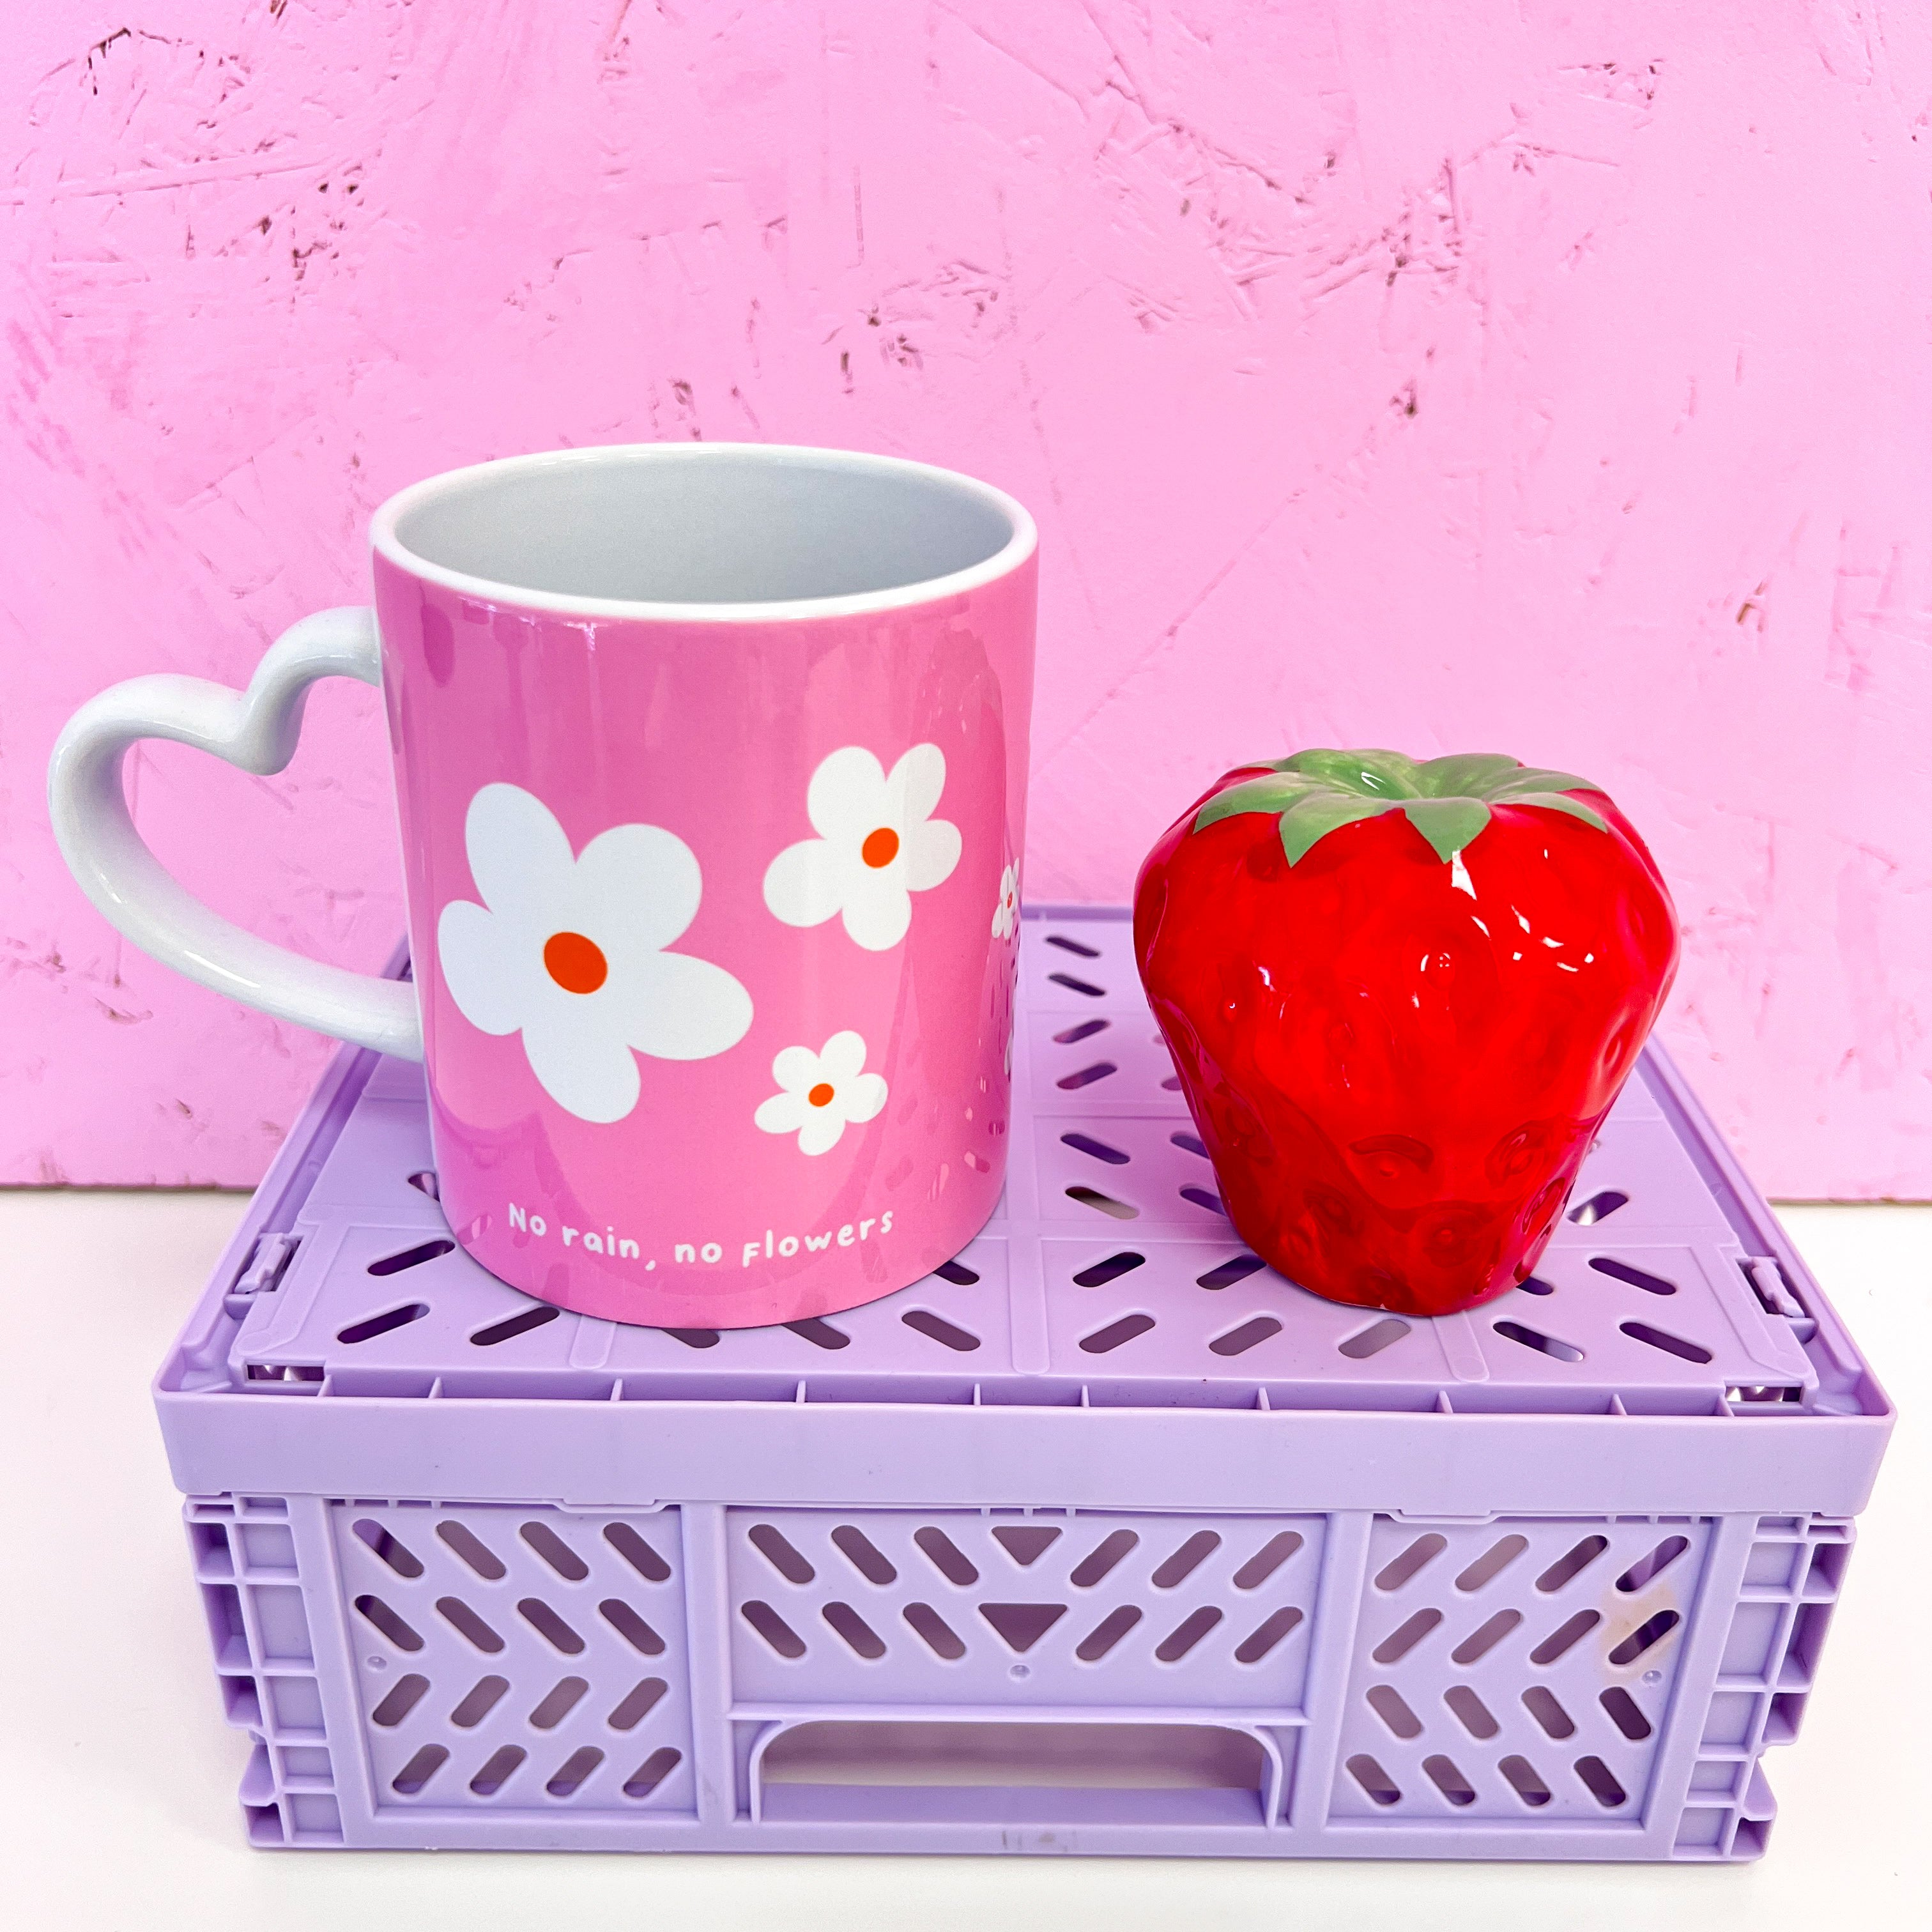 No rain, no flowers (pink) mug